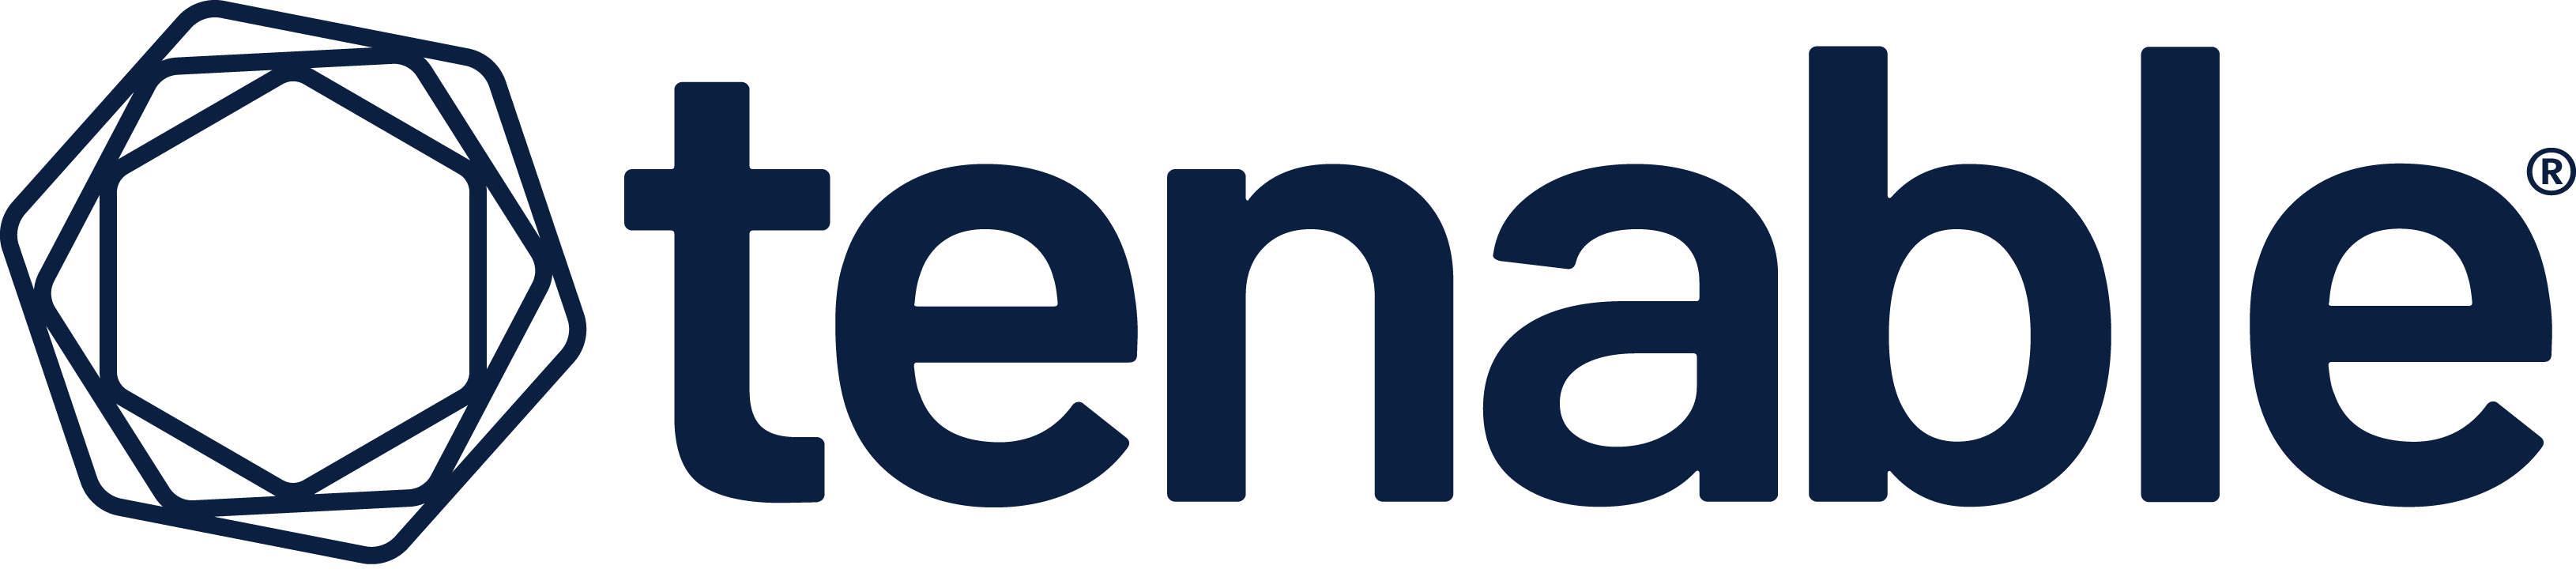 Tenable logo